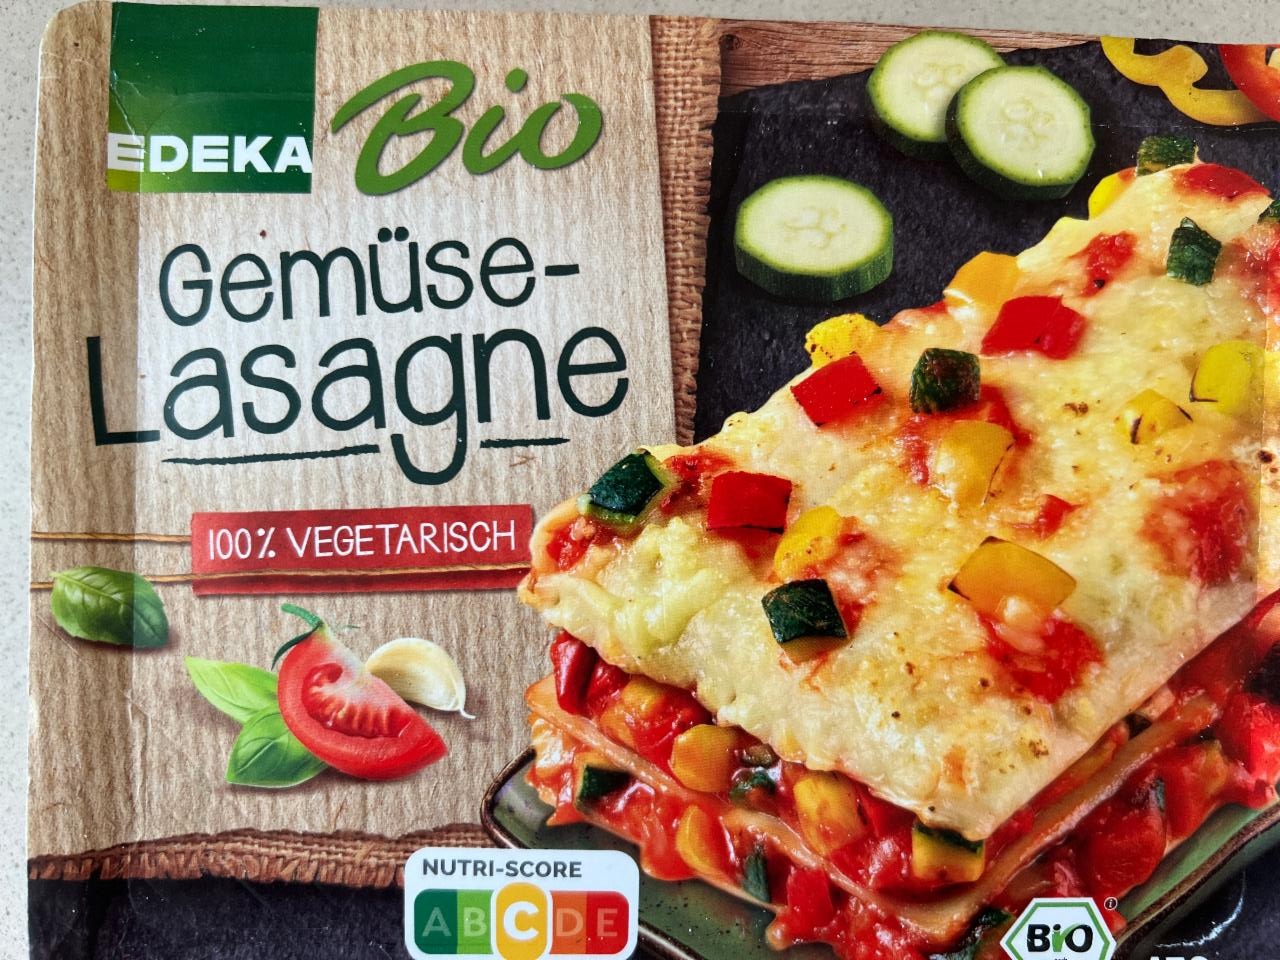 Fotografie - Gemüse lasagne 100% vegetarisch Edeka Bio +